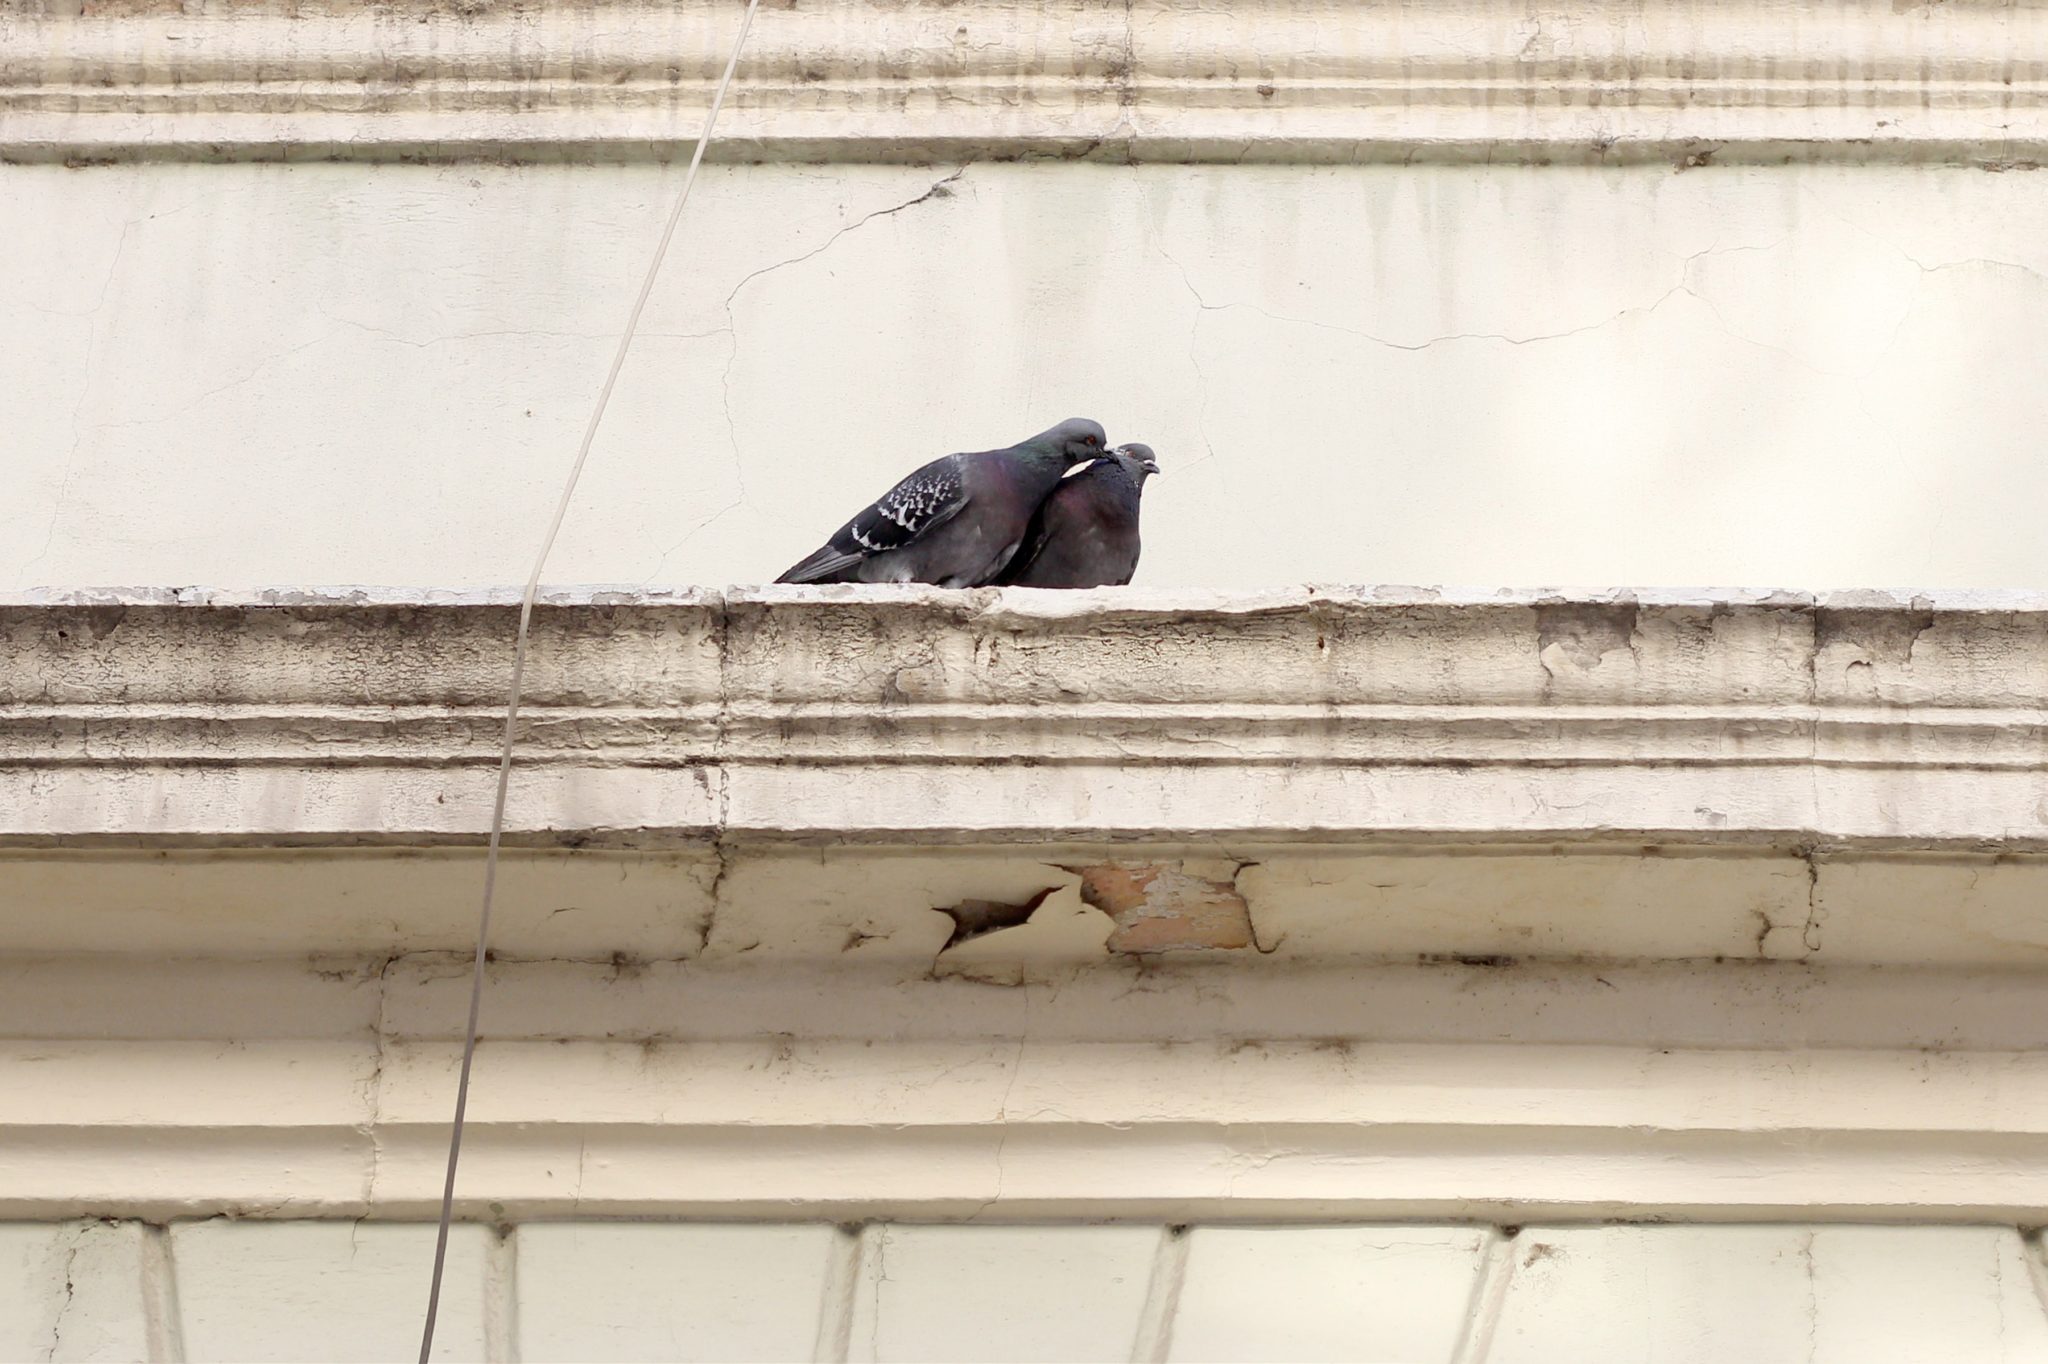 pigeons-love-on-the-edge-of-the-building-2021-08-30-09-21-02-utc